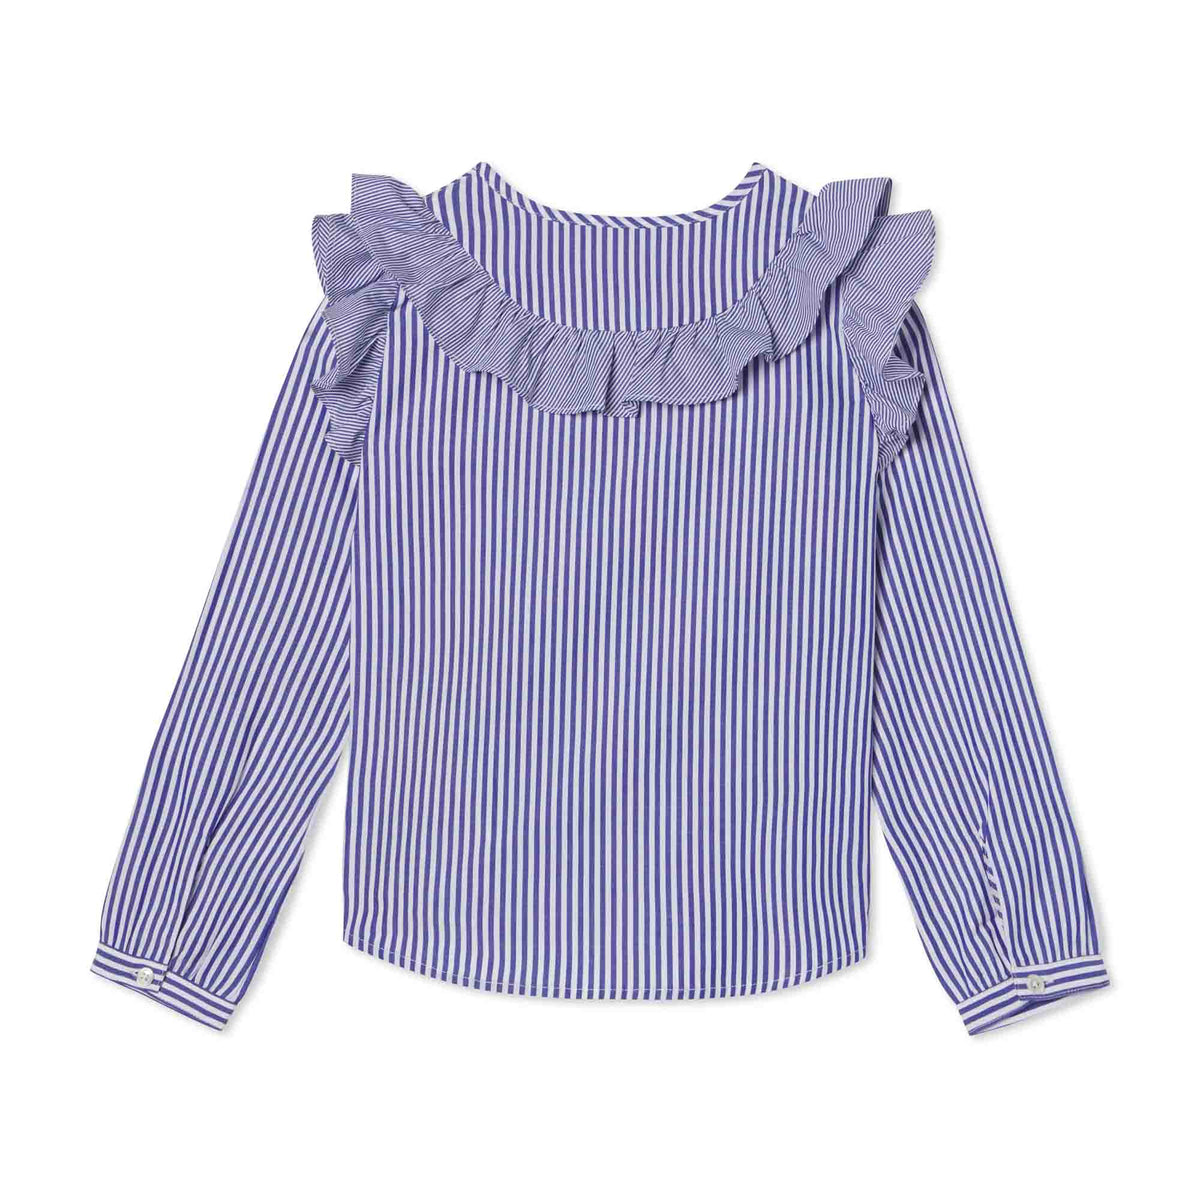 Classic and Preppy Gemma Top, Roman Stripe-Shirts and Tops-CPC - Classic Prep Childrenswear